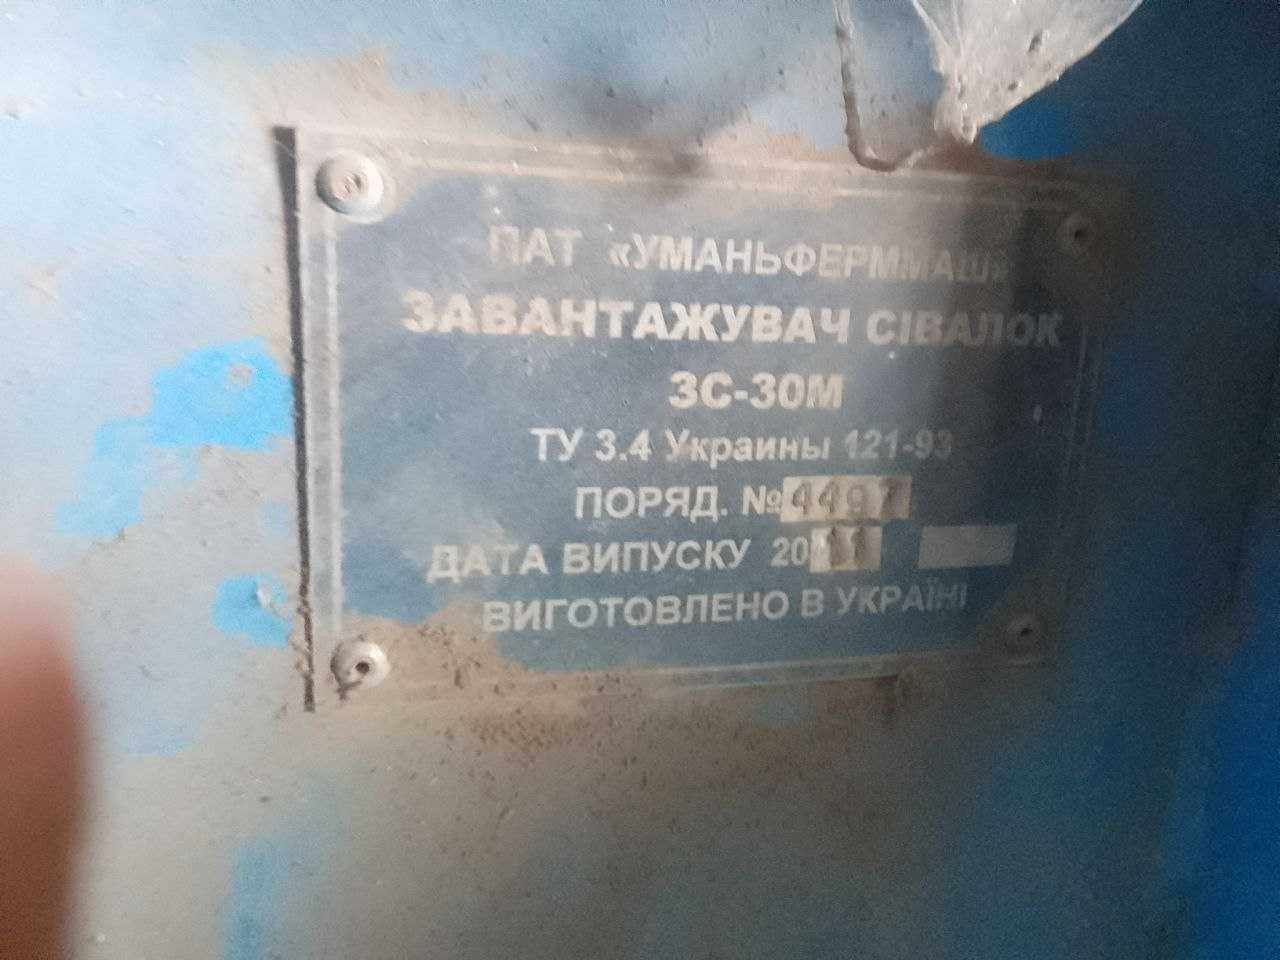 Загрузчик сівалок ЗС-30М